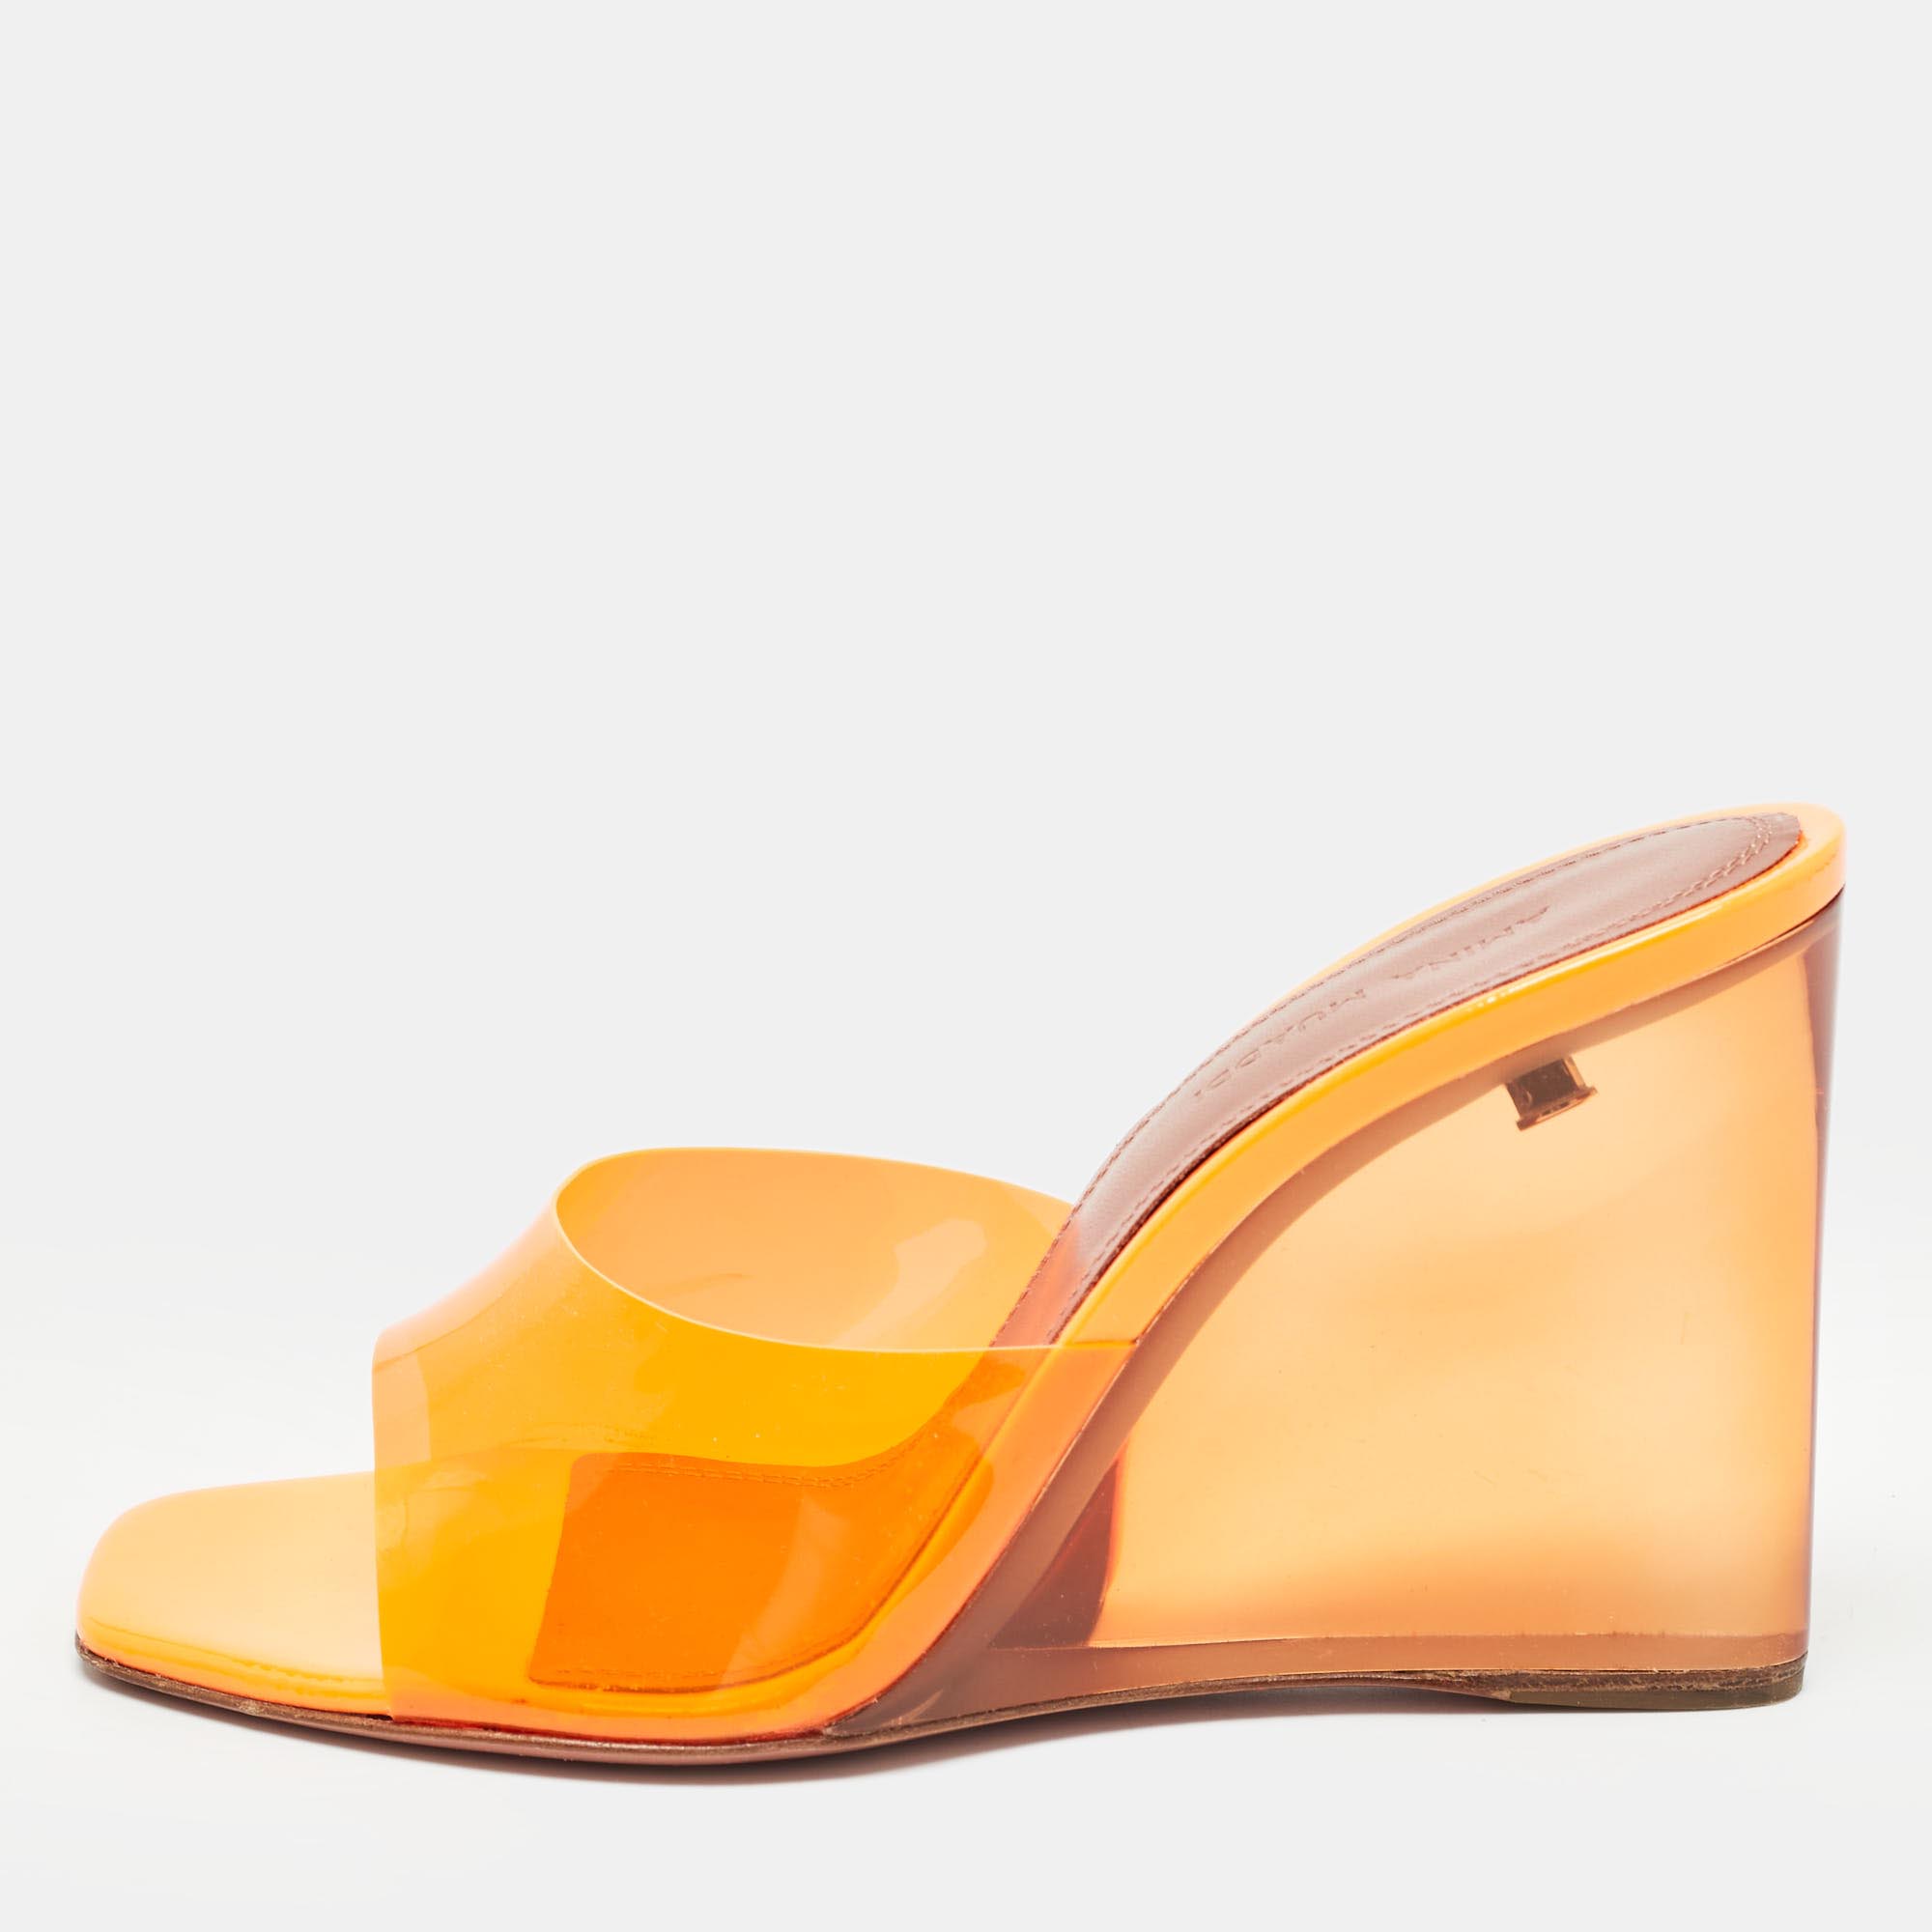 Amina muaddi neon orange pvc lupita wedge sandals size 37